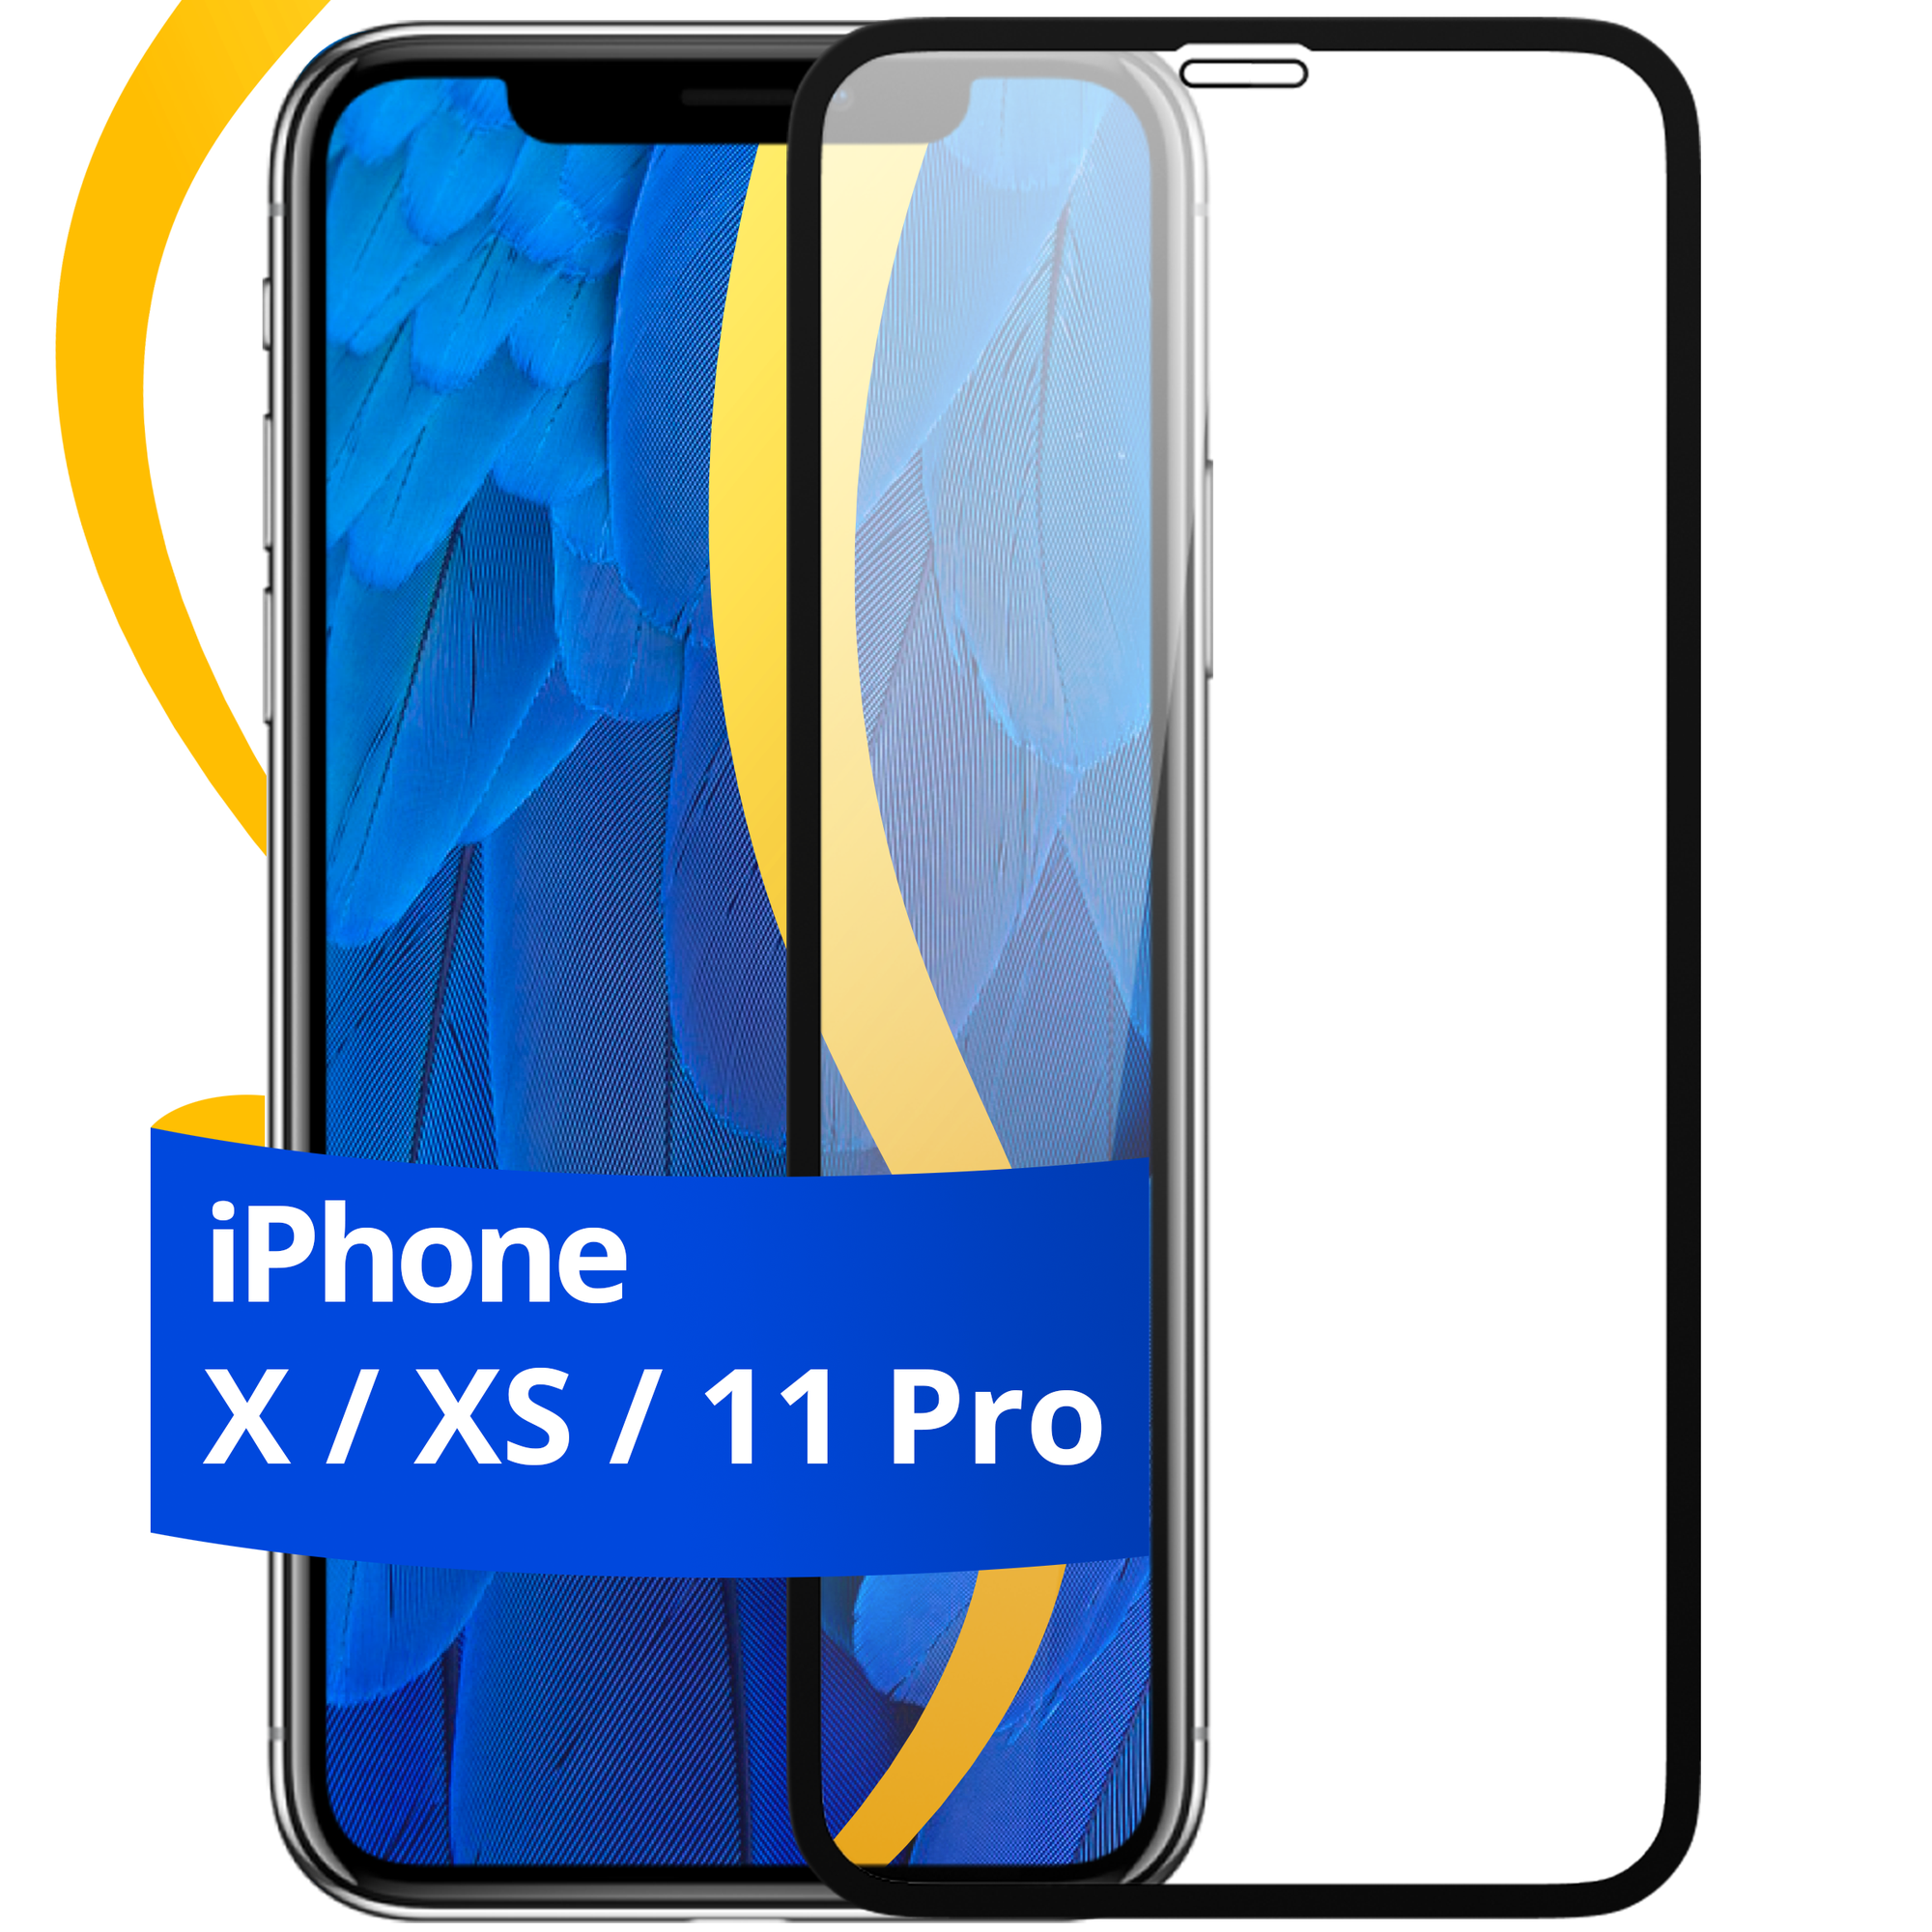 Комплект 2 шт защитное стекло для телефона Apple iPhone X XS и 11 Pro / Набор противоударных стекол на смартфон Эпл Айфон Х ХС и 11 Про